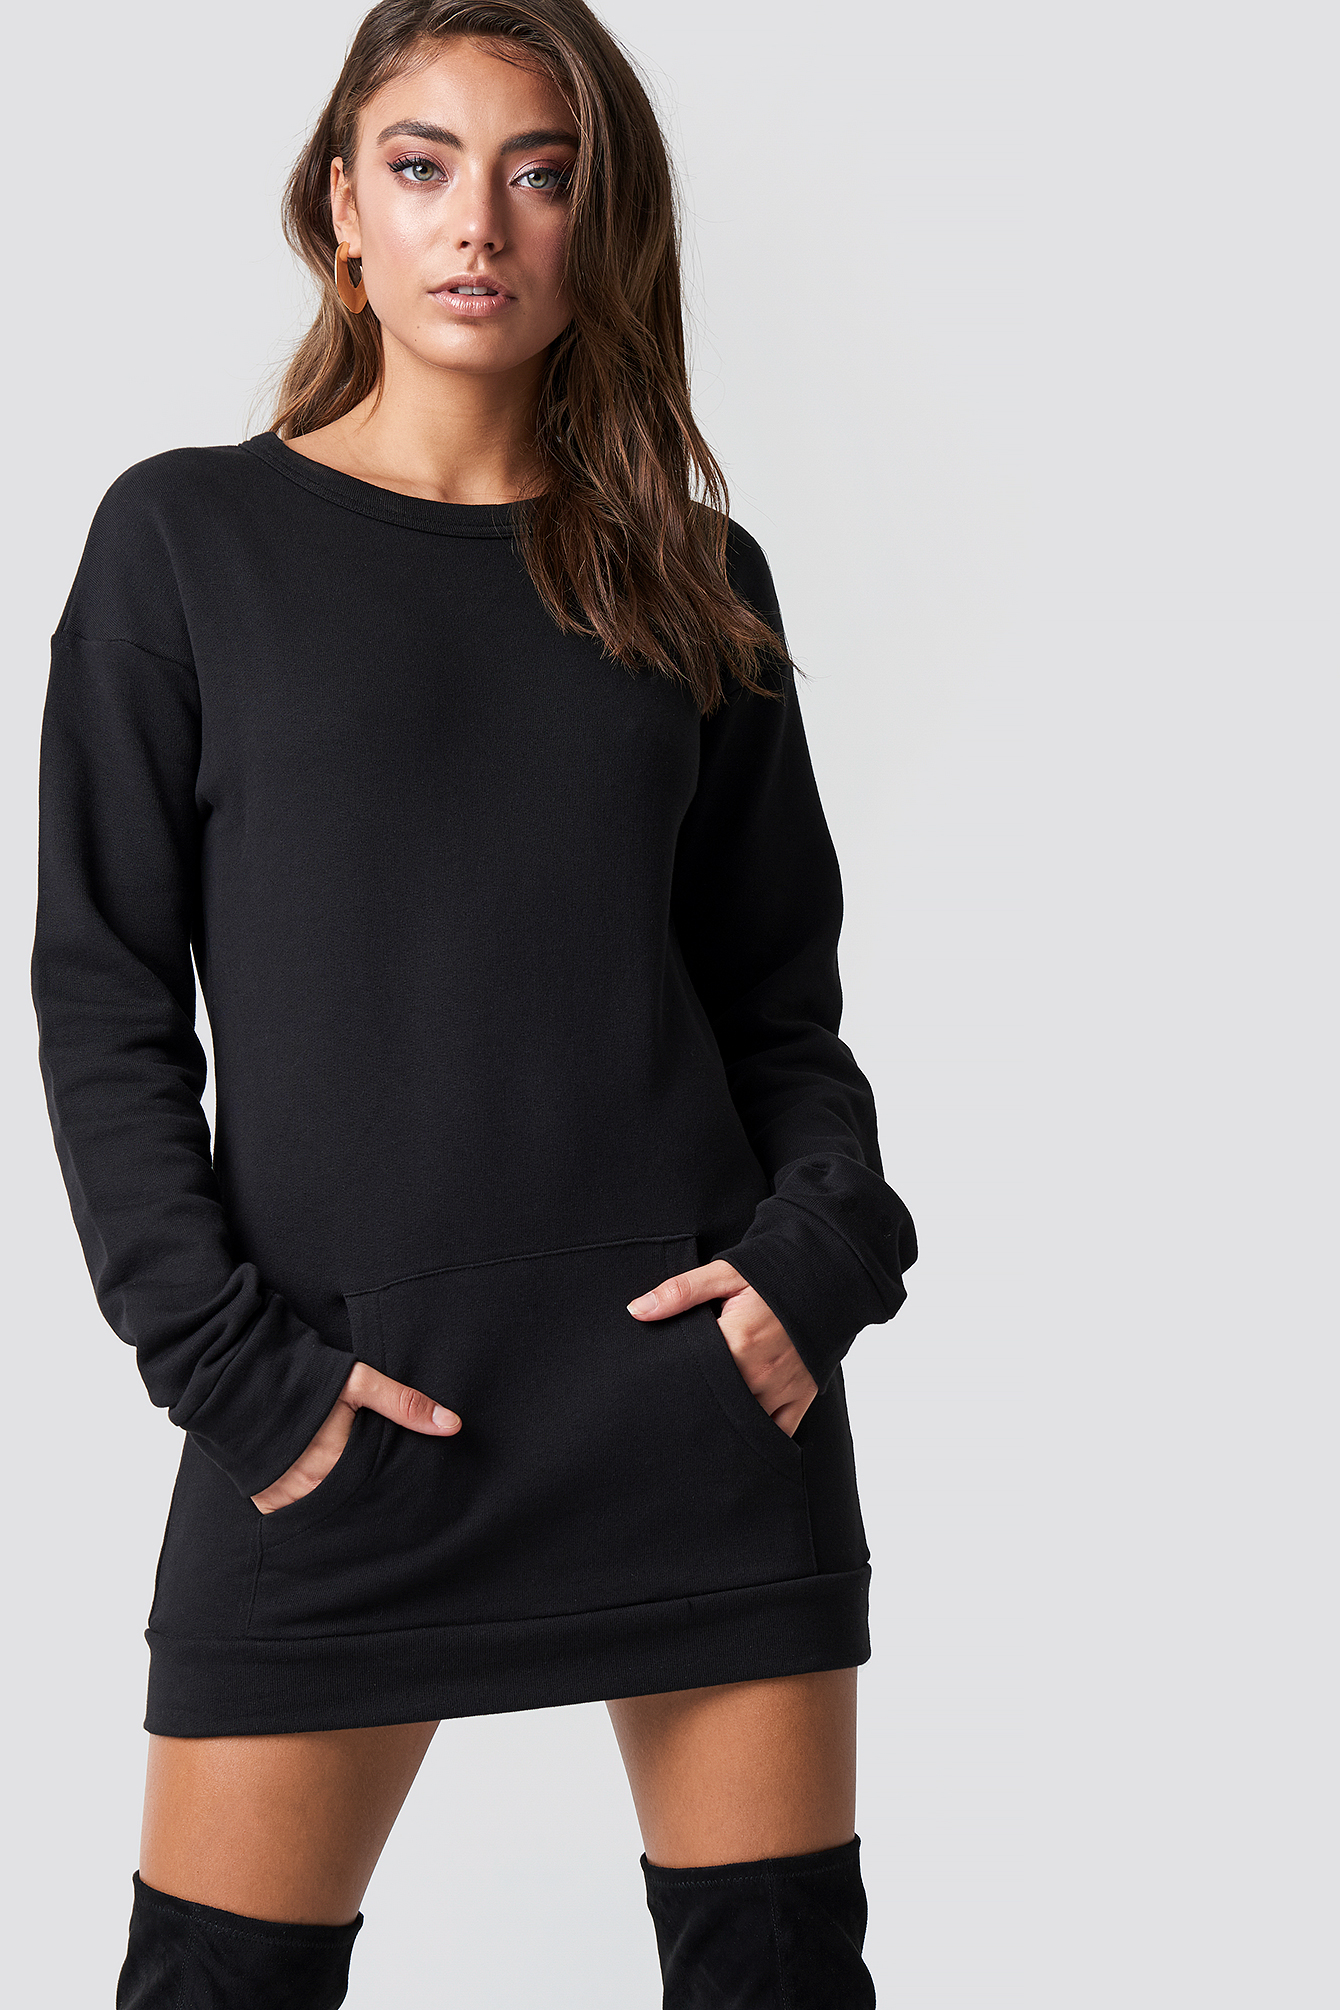 Black Long Sweater